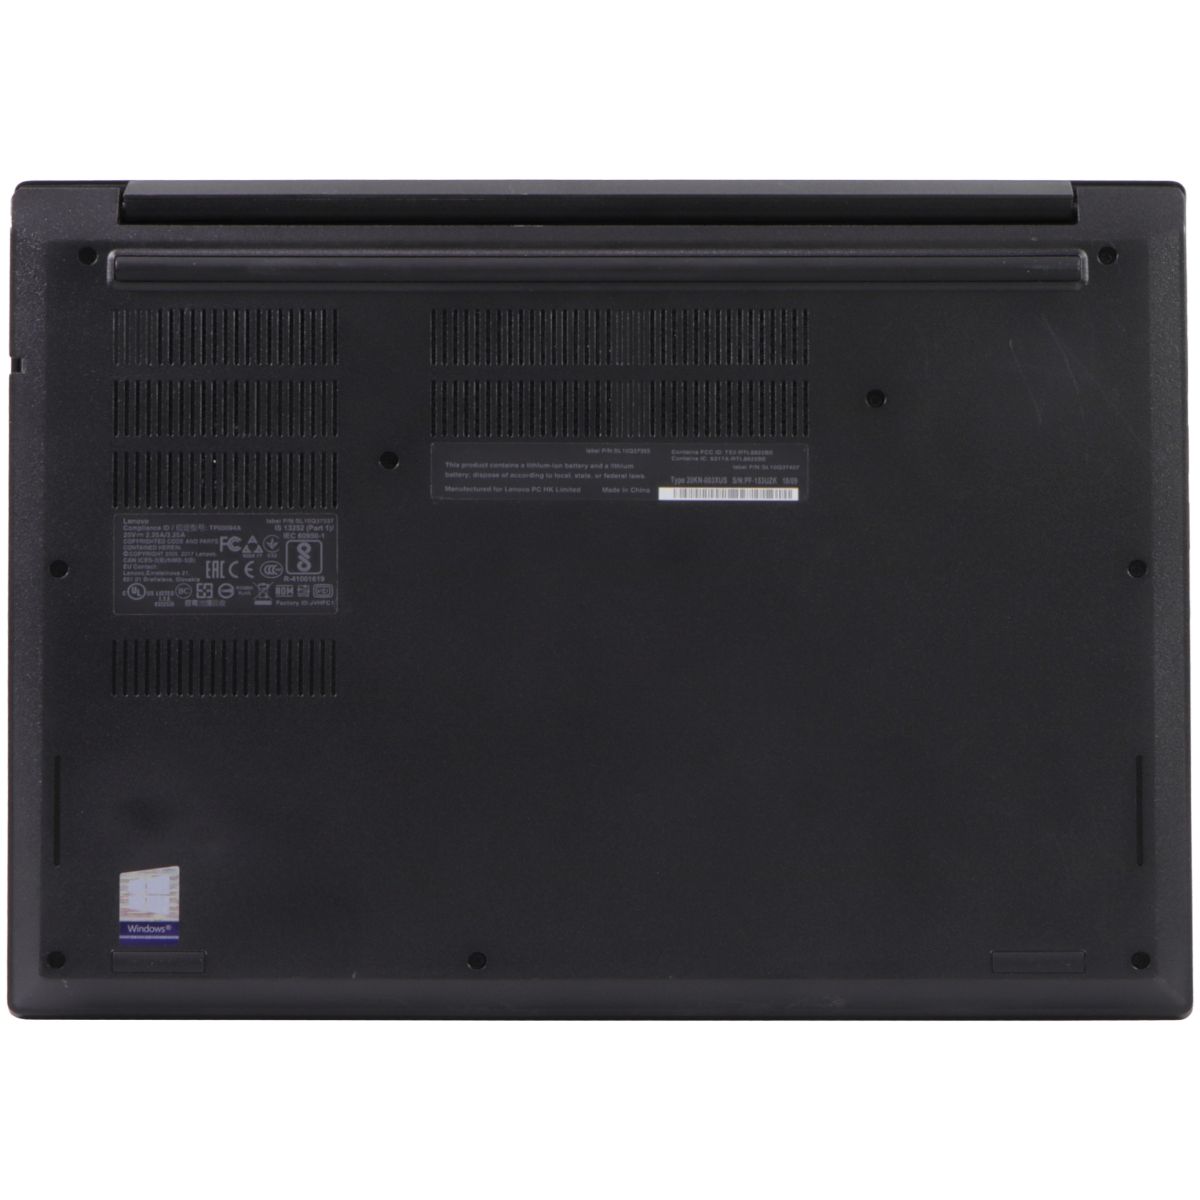 Lenovo ThinkPad E480 (14-in) Laptop (20KN-003XUS) i5-8250U/256GB/16GB/10 Home Laptops - PC Laptops & Netbooks Lenovo    - Simple Cell Bulk Wholesale Pricing - USA Seller